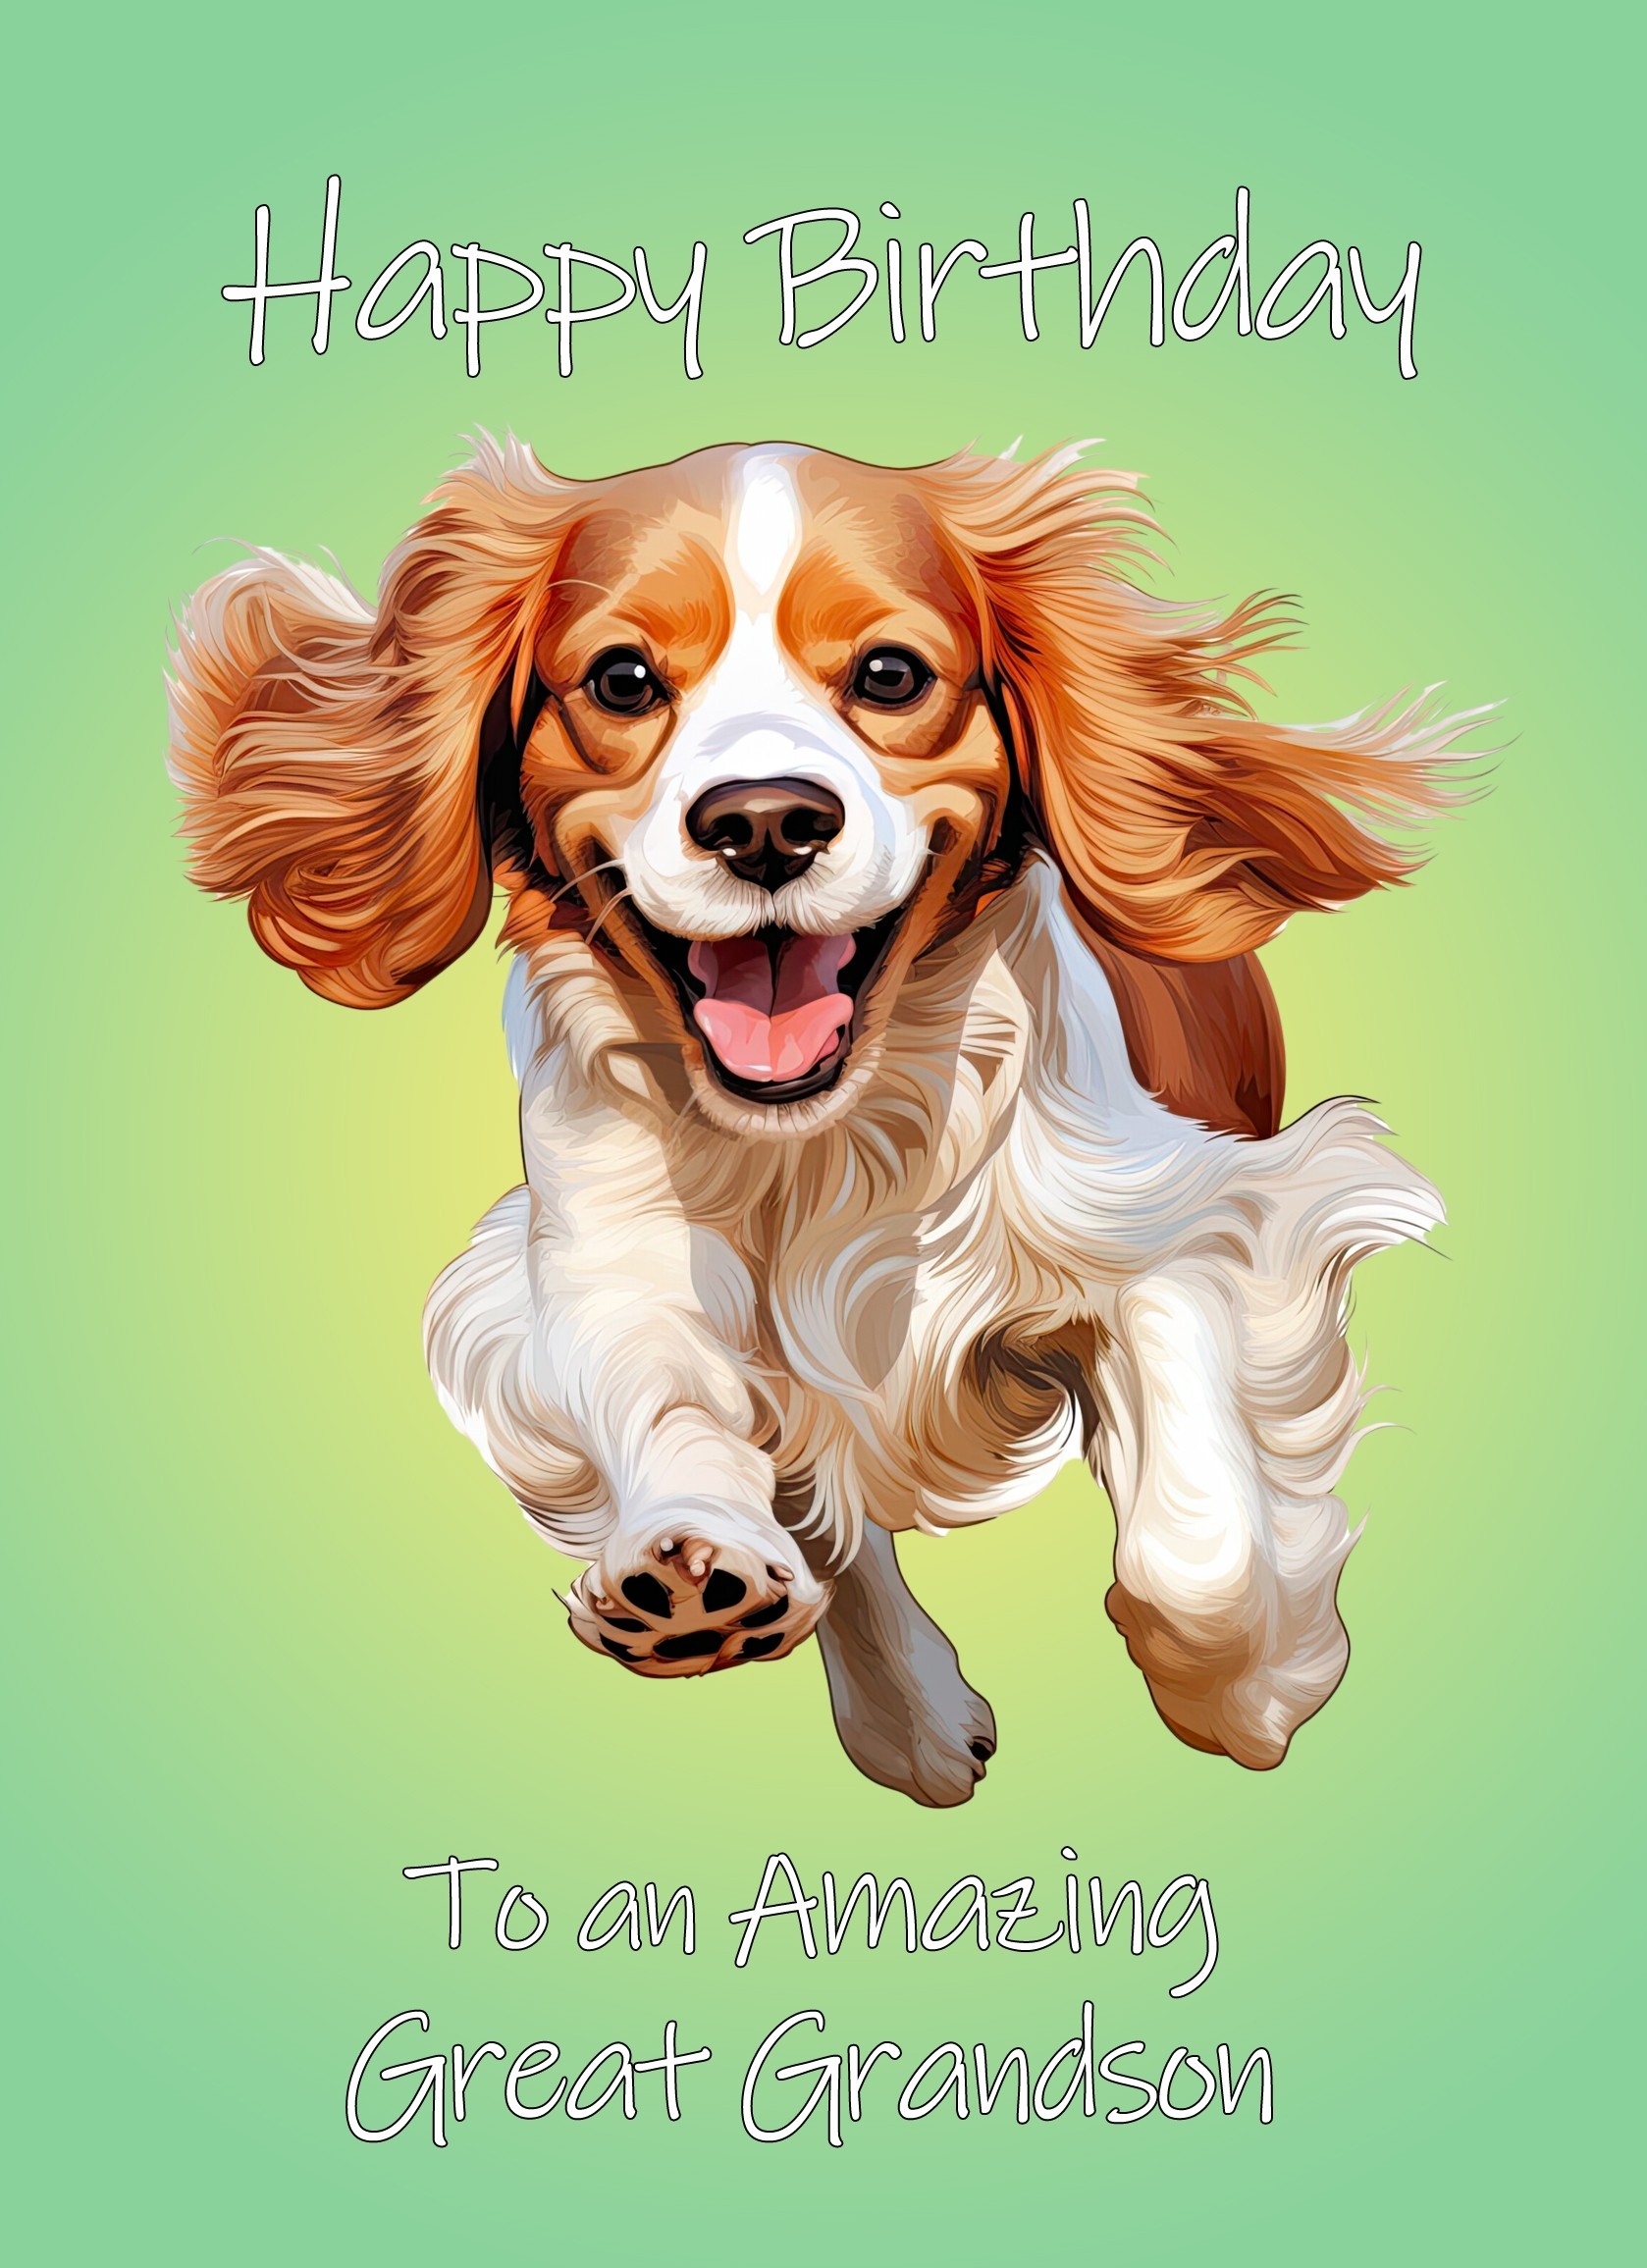 Cavalier King Charles Spaniel Dog Birthday Card For Great Grandson